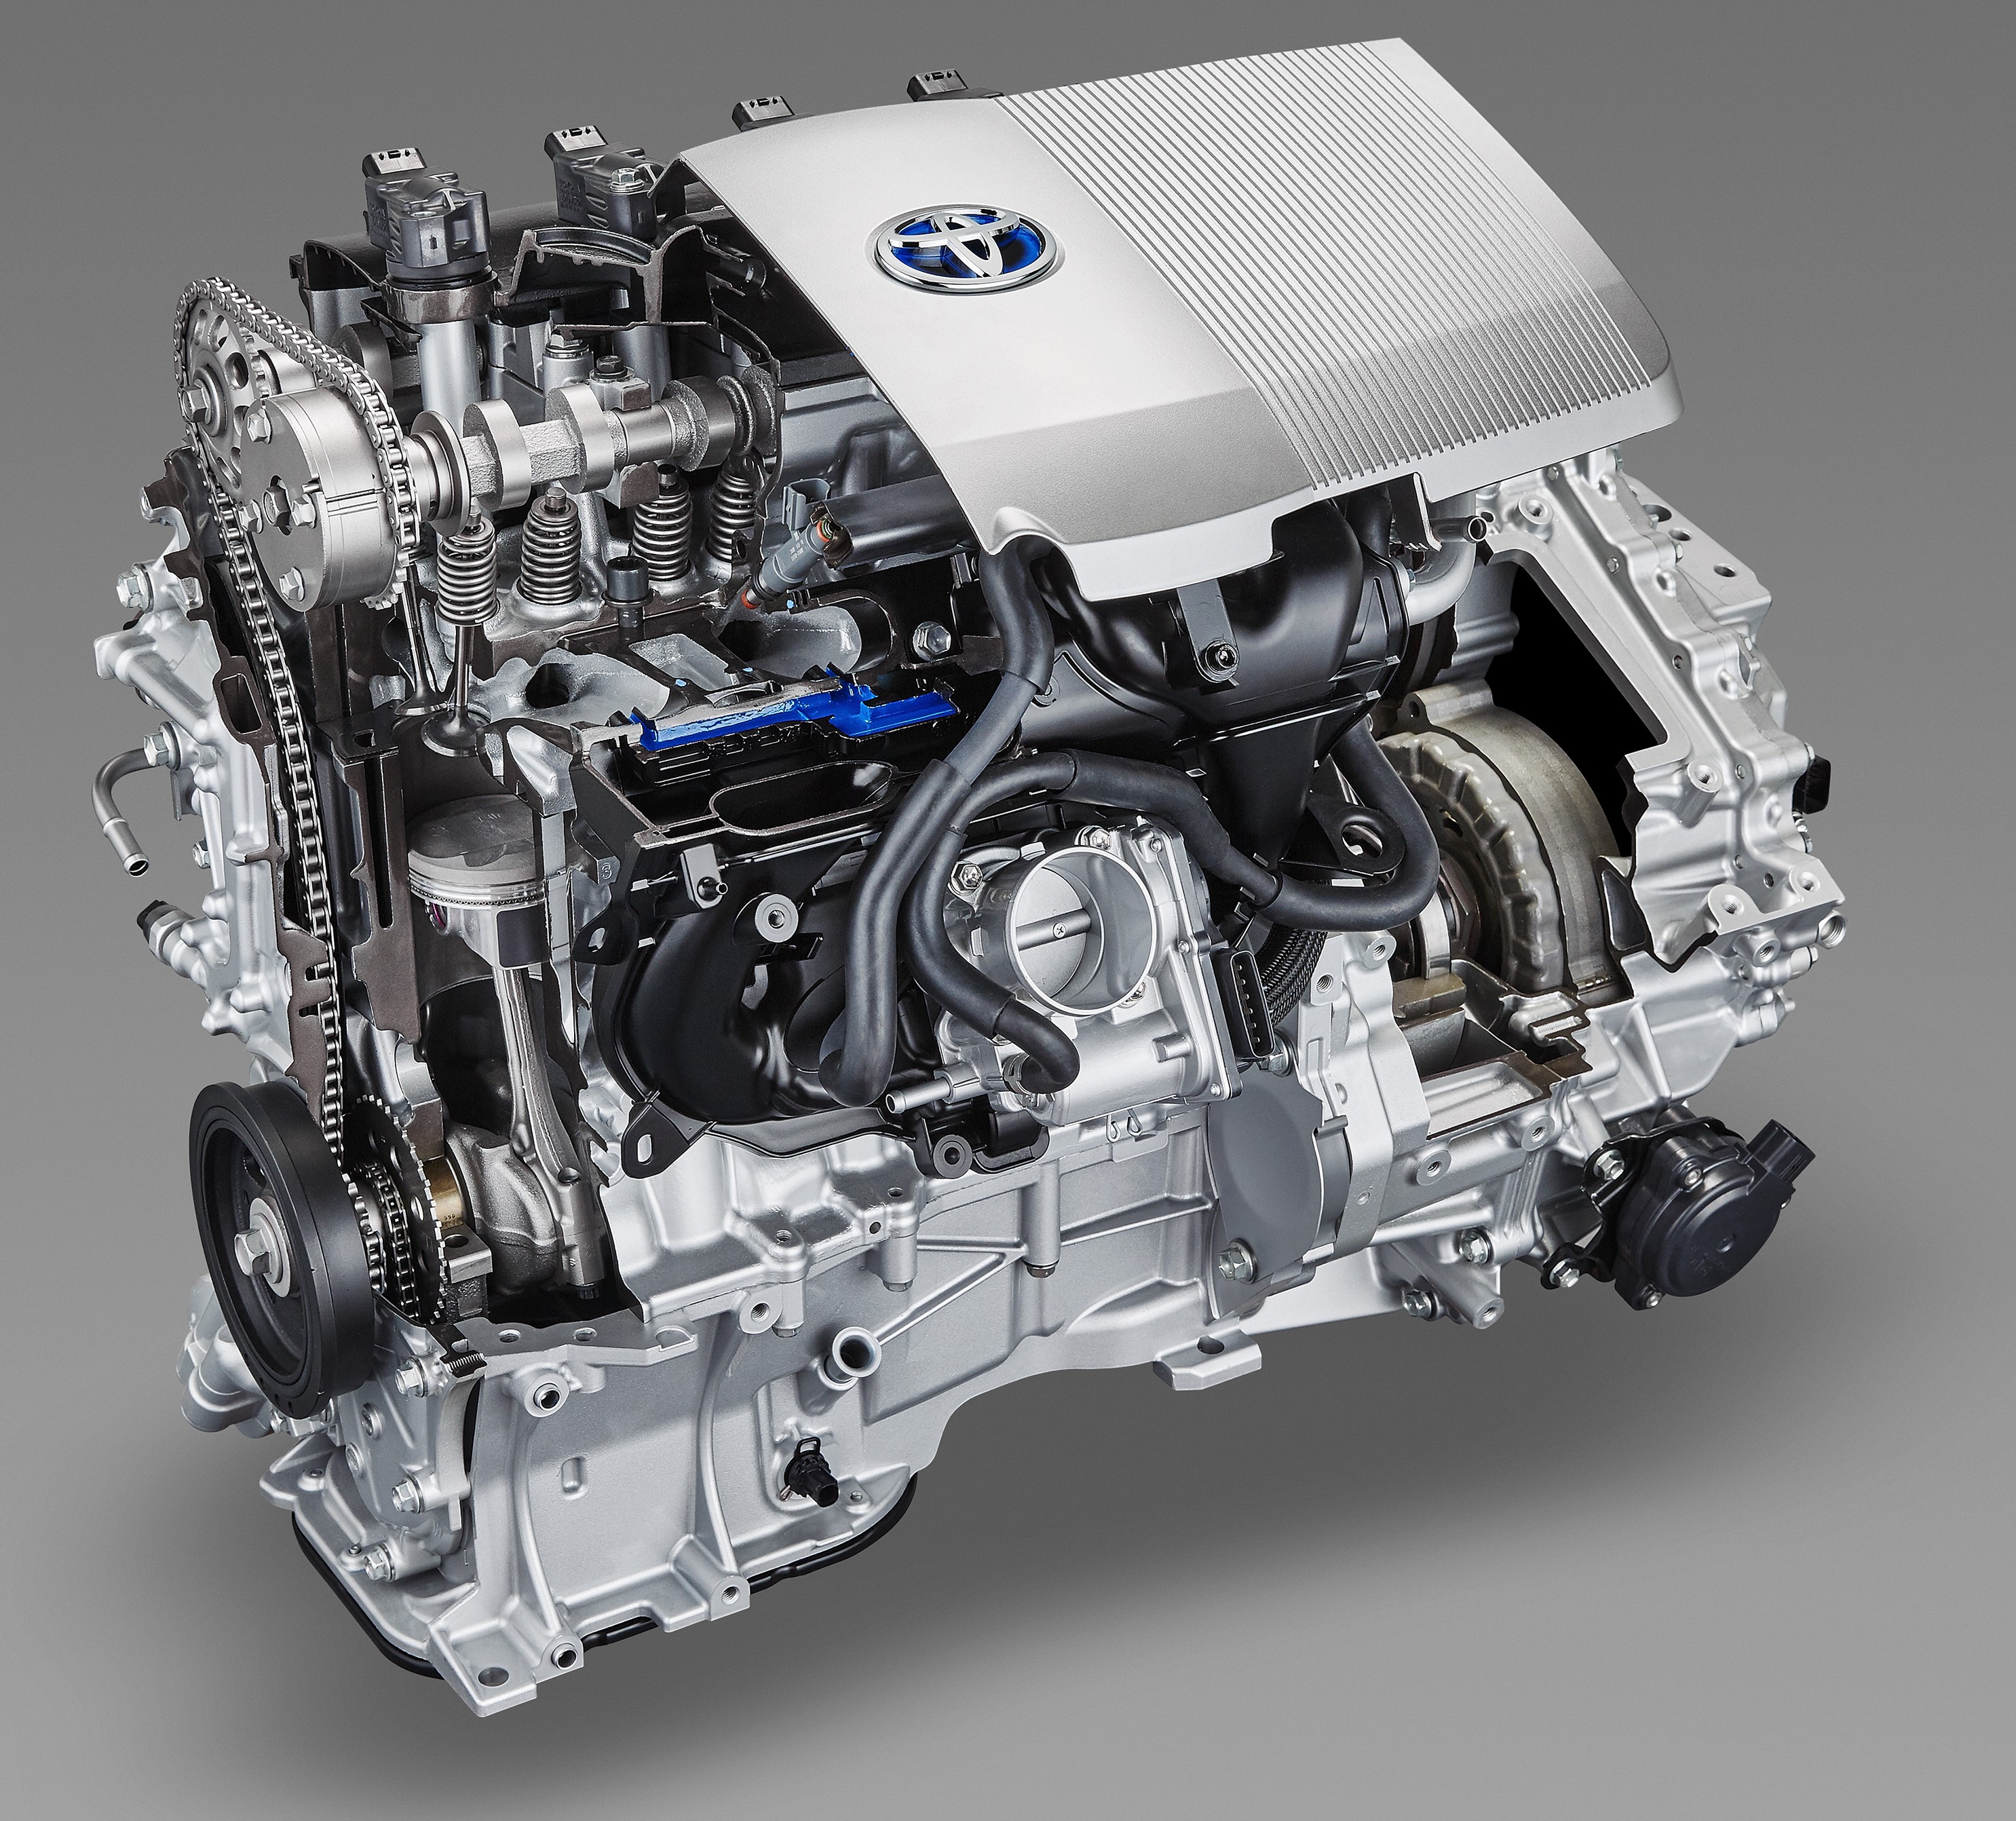 Hybrid Car Engine Diagram 2016 toyota Prius Specifications Revealed Of Hybrid Car Engine Diagram